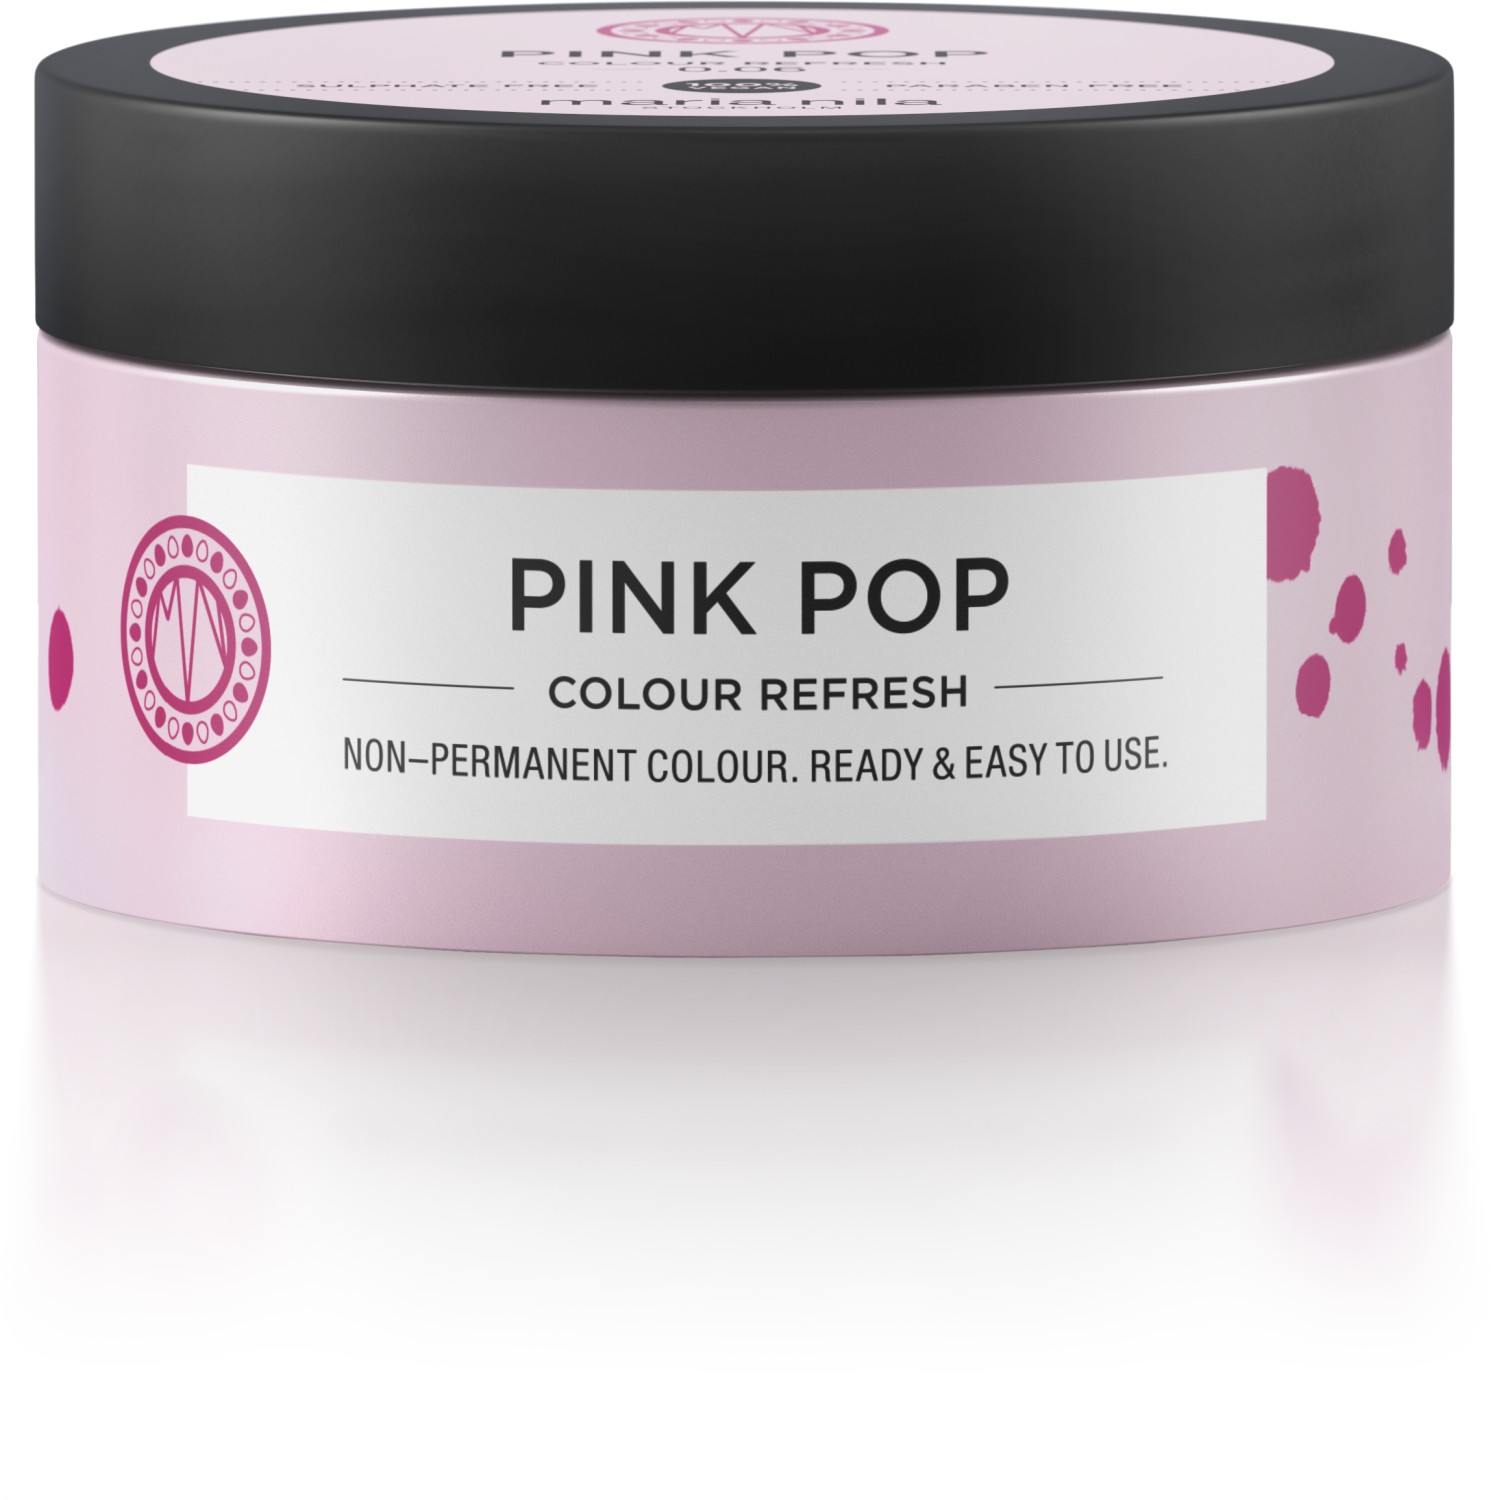  Maria Nila Colour Refresh Pink Pop 0.06 100 ml 